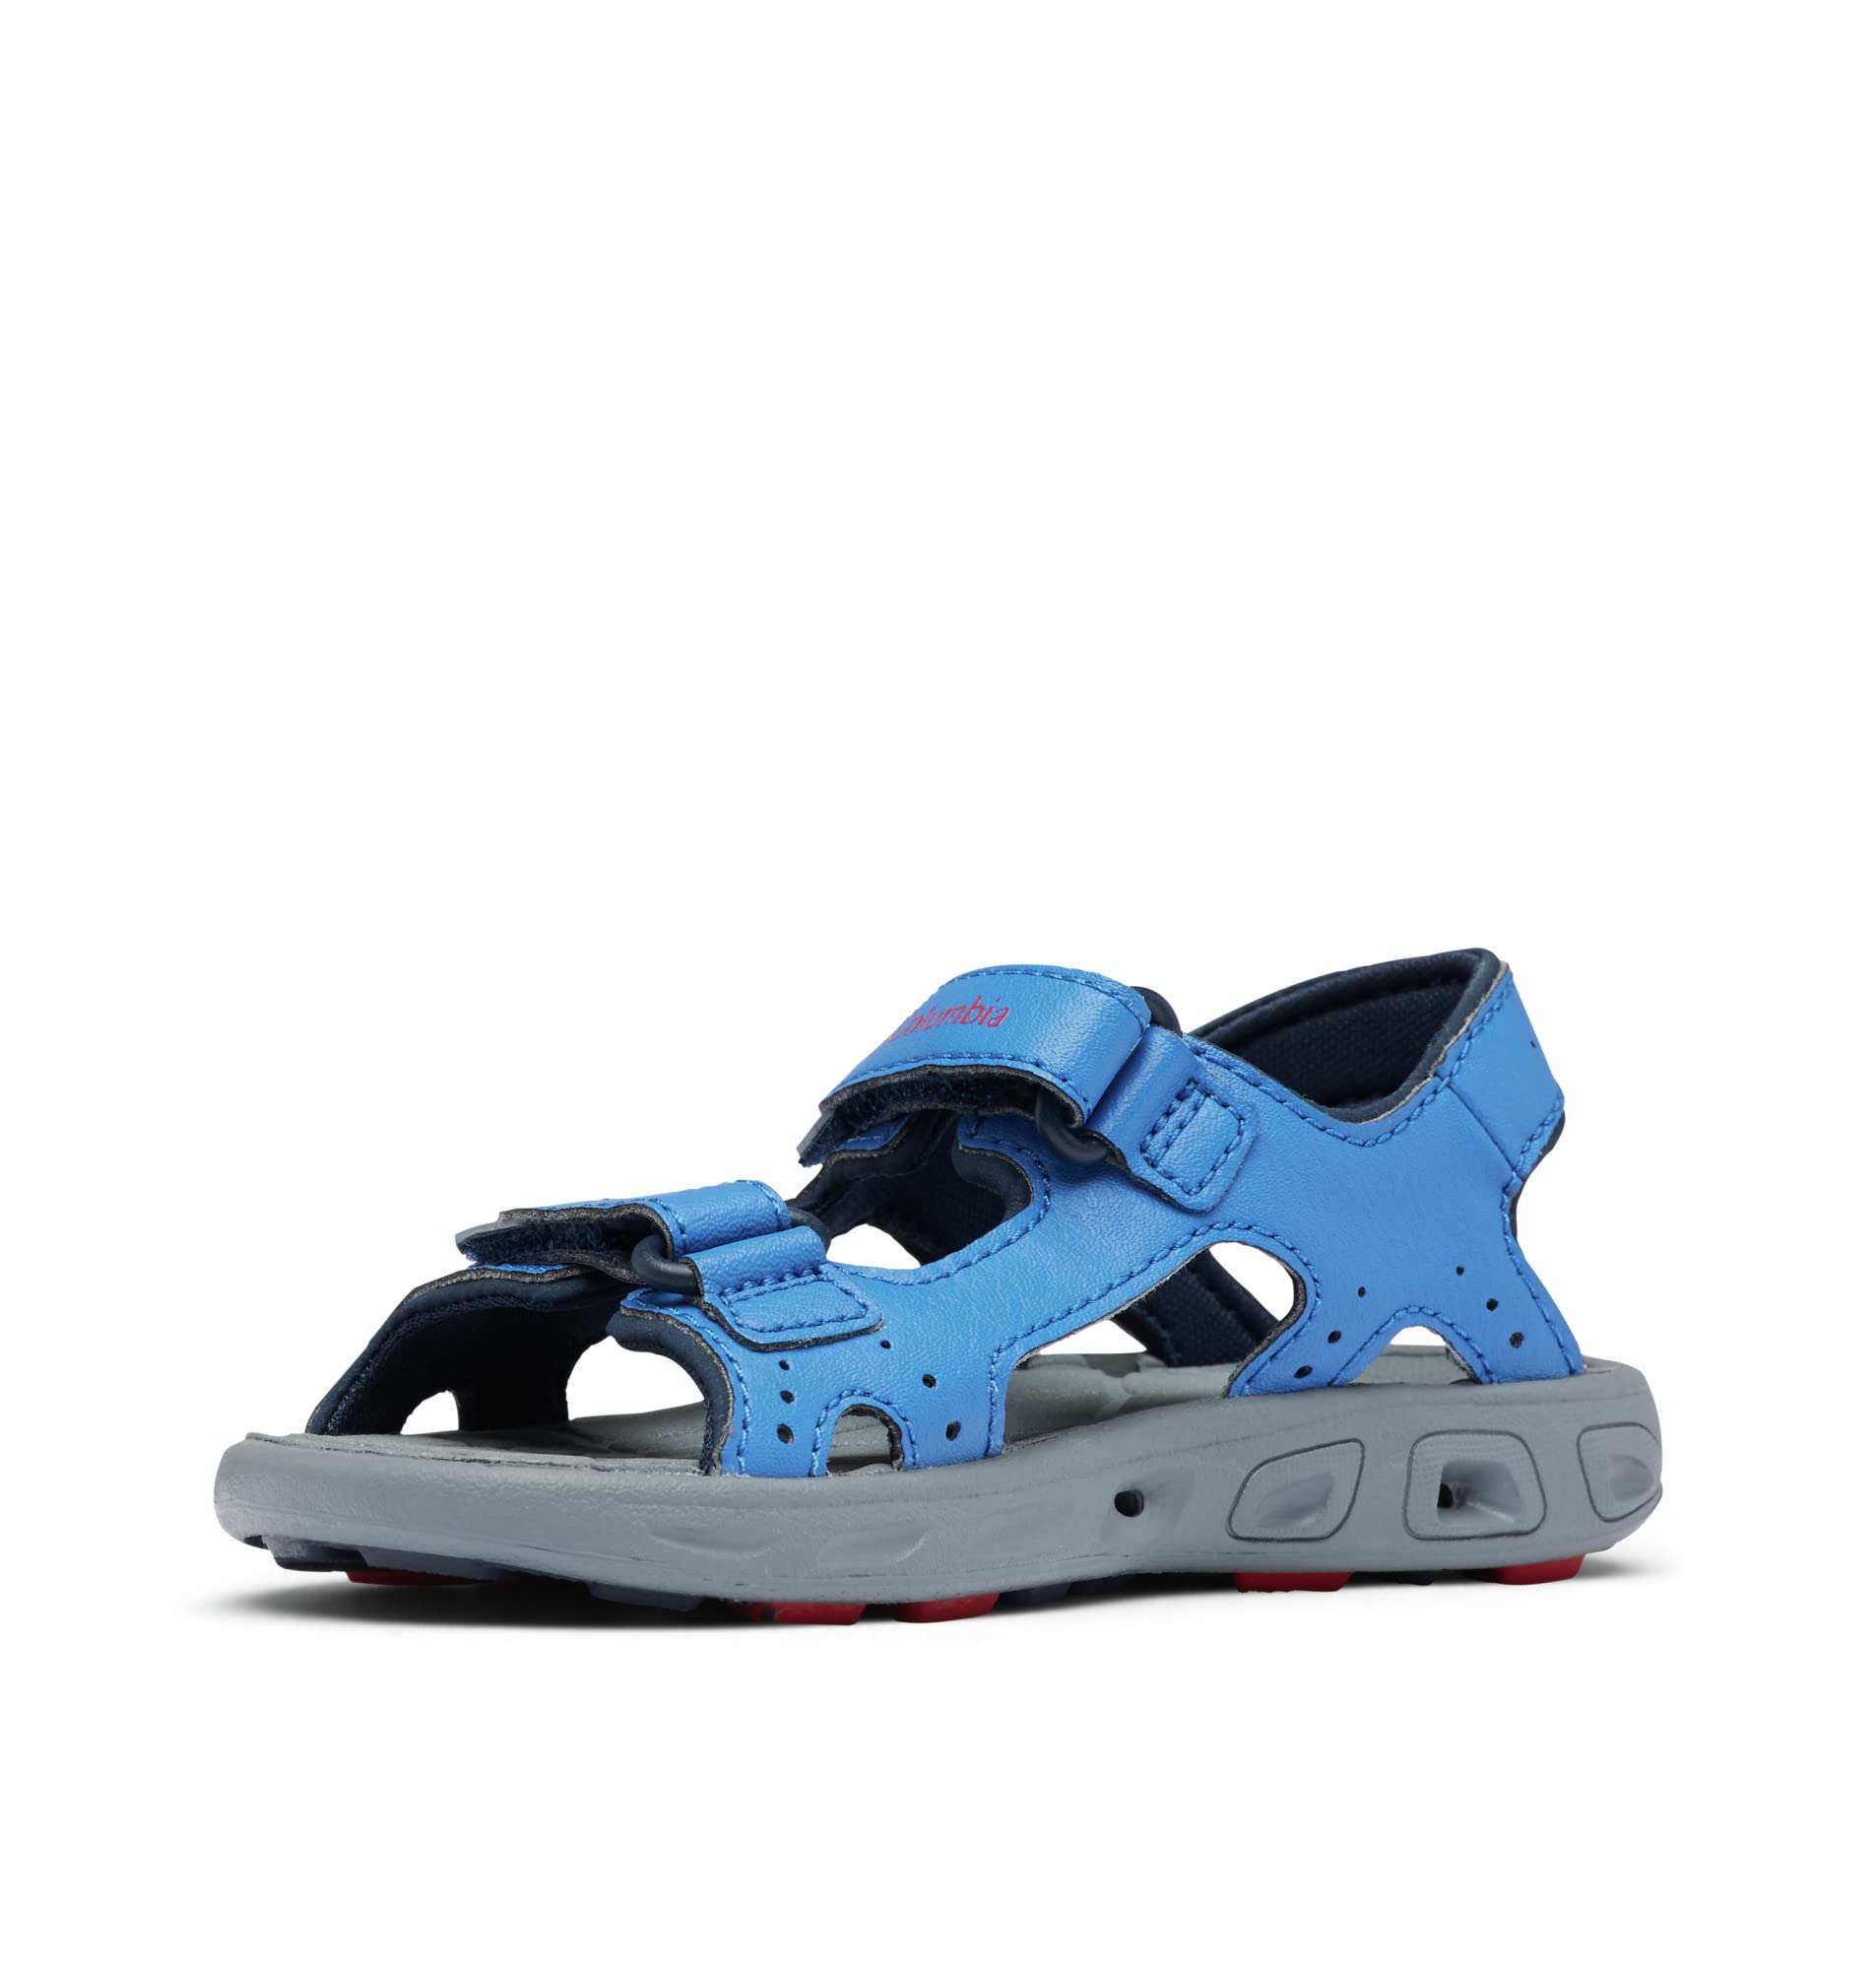 Columbia Unisex-Child Techsun Vent Sport Sandal